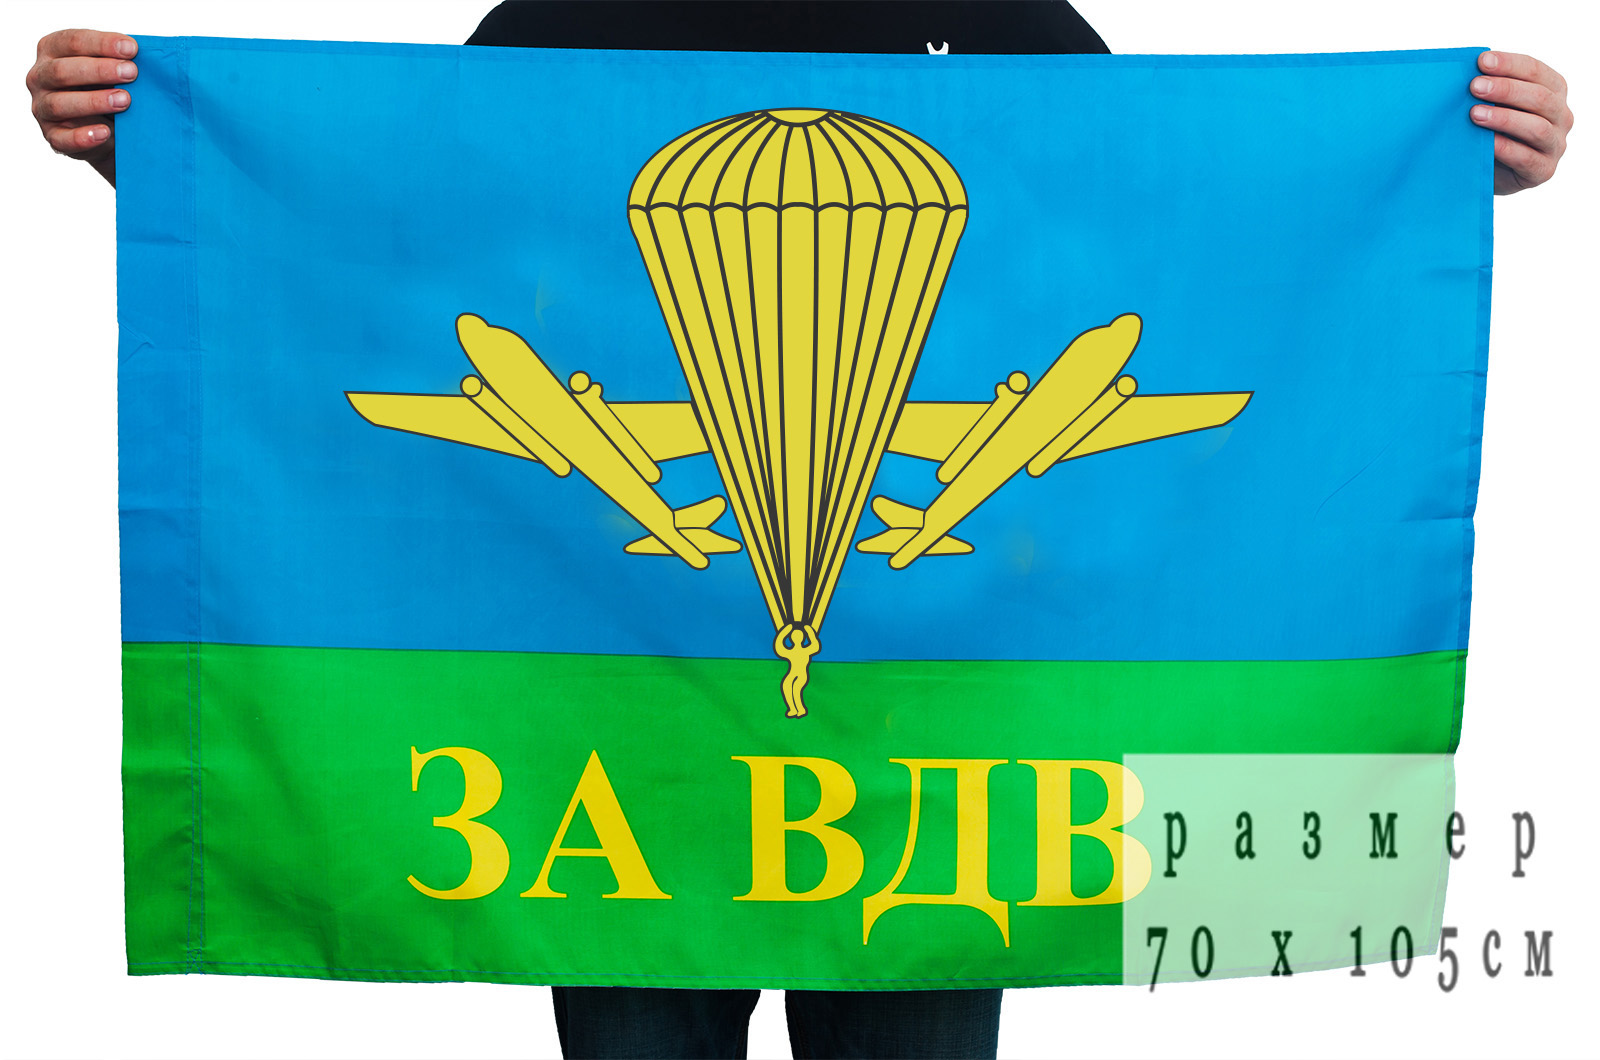 Заказать флаг "За ВДВ РФ" 70x105 см с доставкой по цене производителя